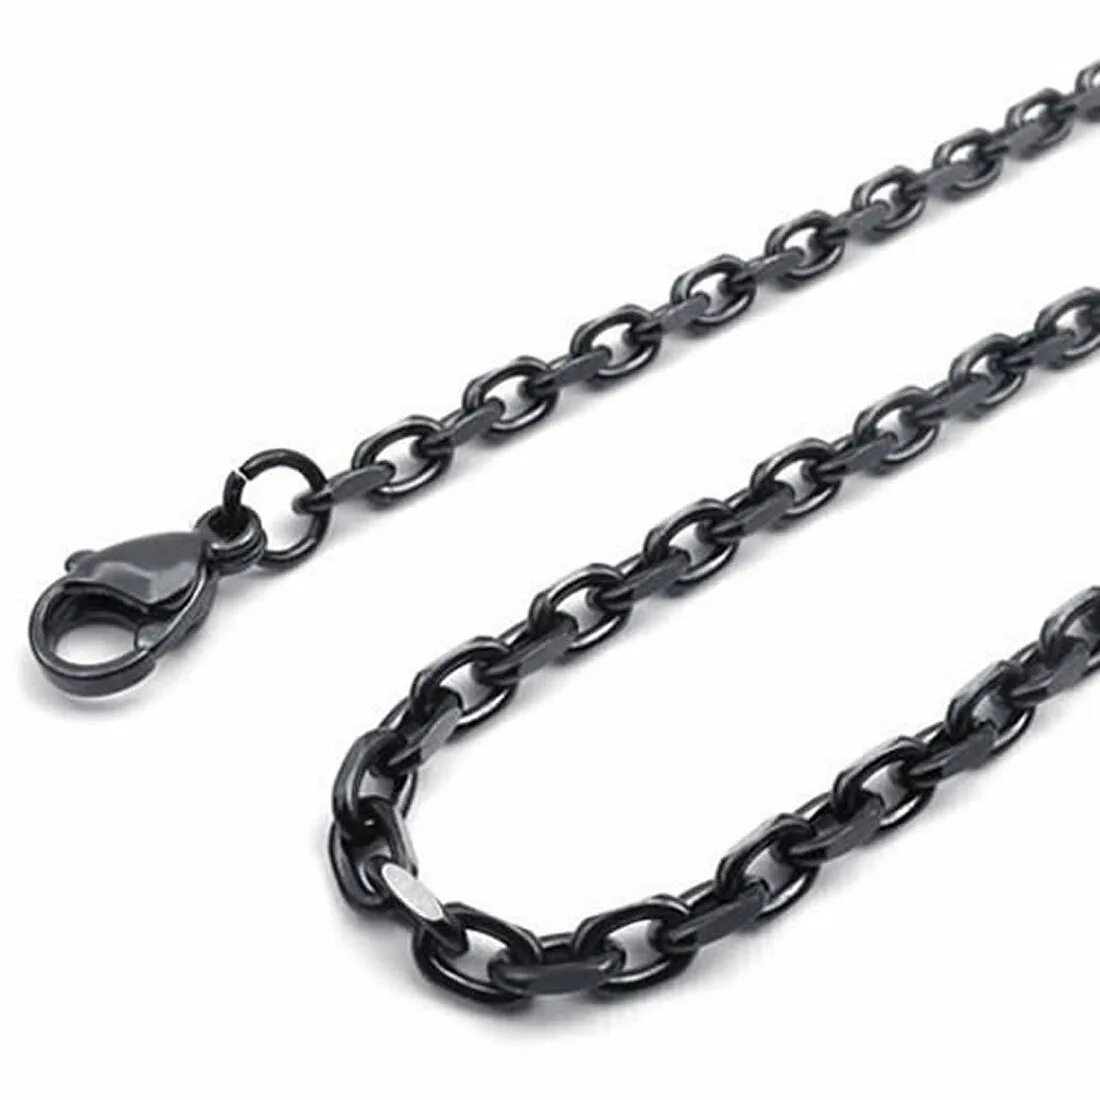 Steel цепь Stainless Chain Necklace. Цепочка мужская. Черное серебро цепь. Черная серебряная цепочка.